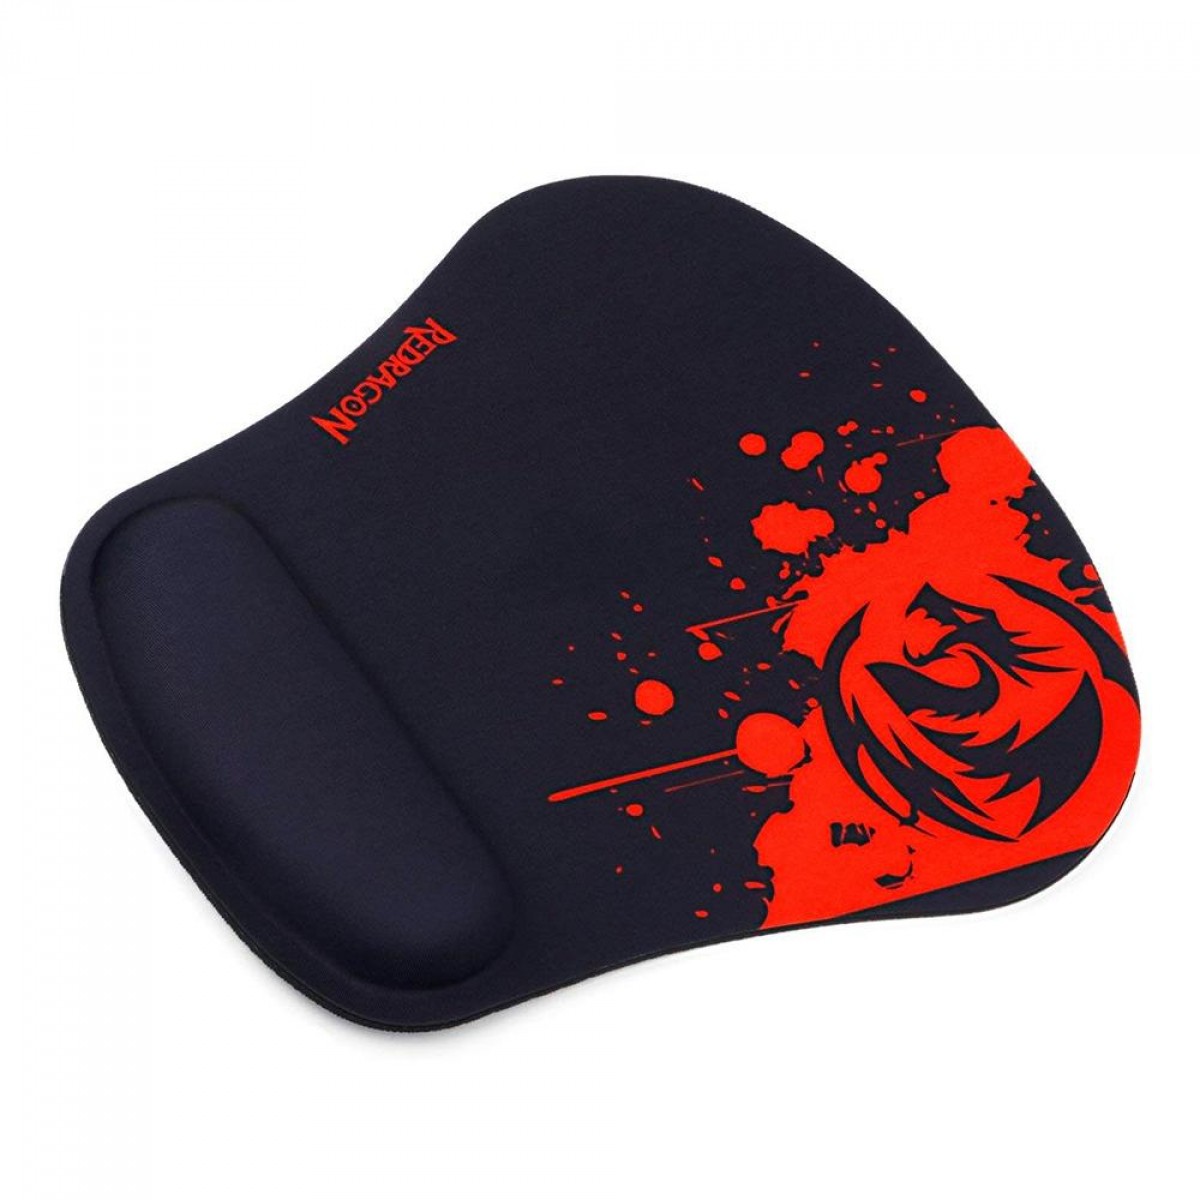 Mousepad Gamer Redragon Libra, 259mm x 248mm, P020